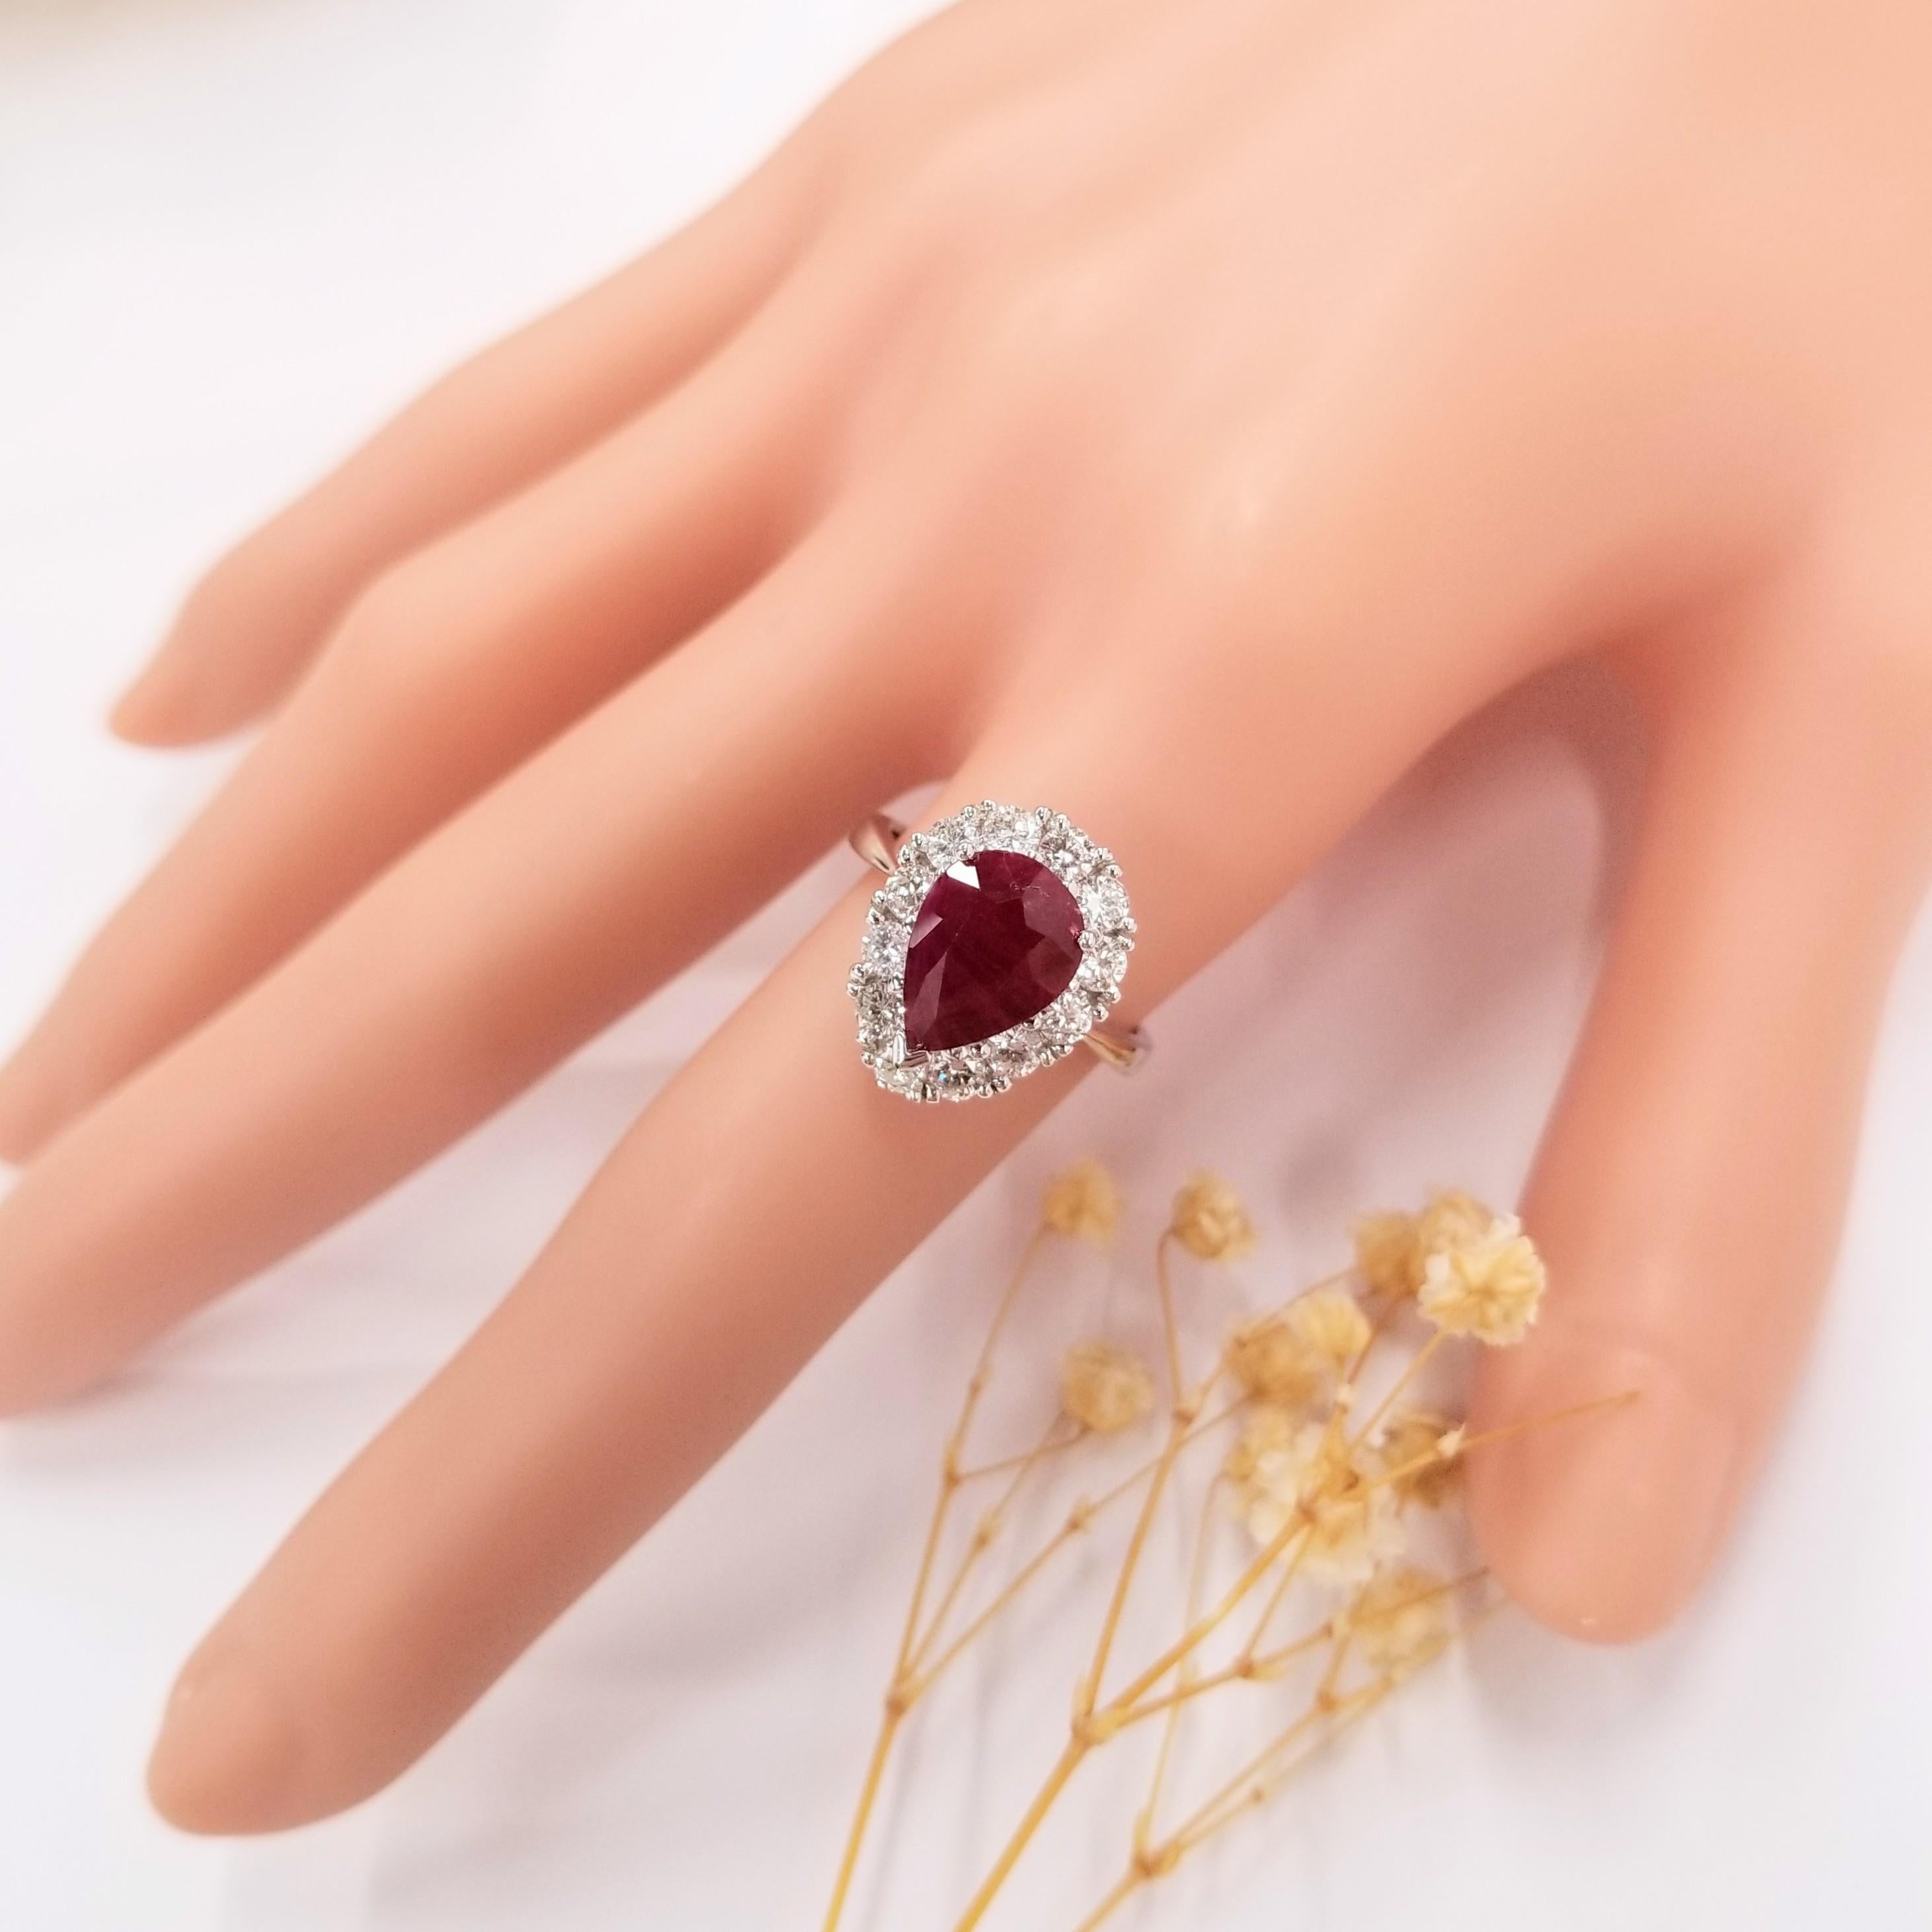 IGI Certified 3.05Carat Ruby & Diamond Ring in 18K White Gold For Sale 4